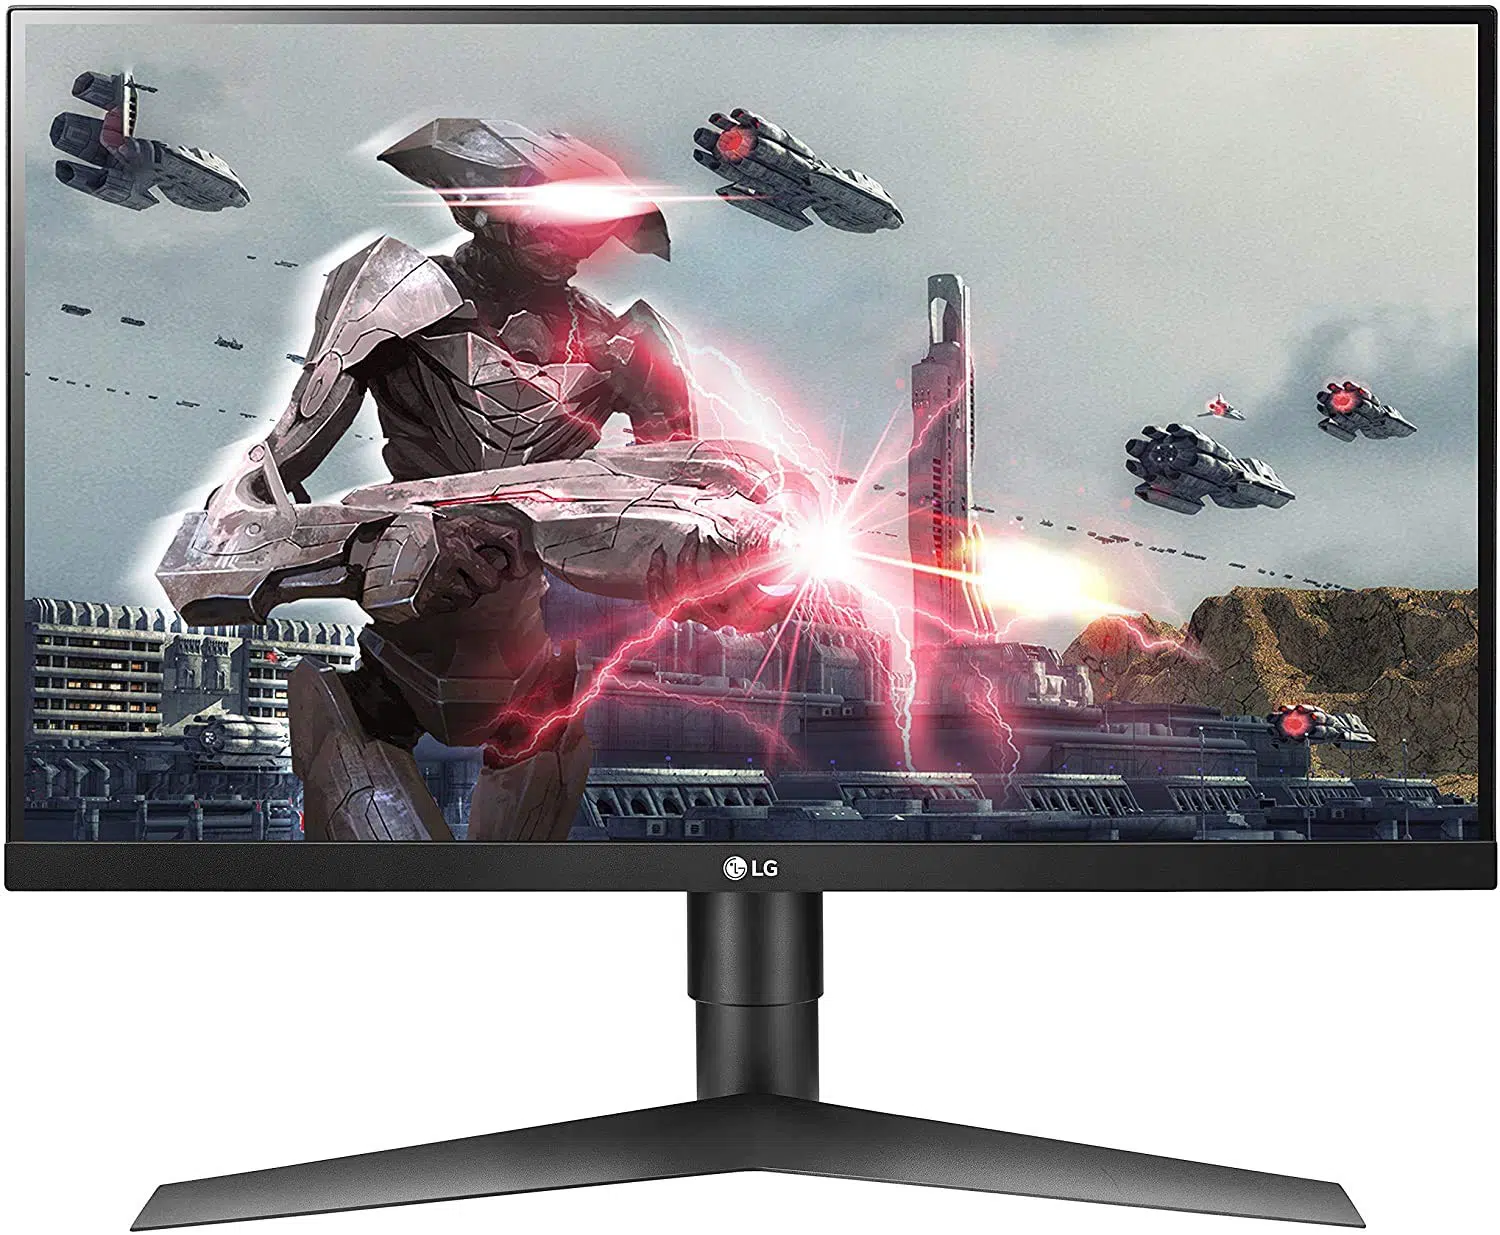 Best Gaming Monitors - LG Ultrawide